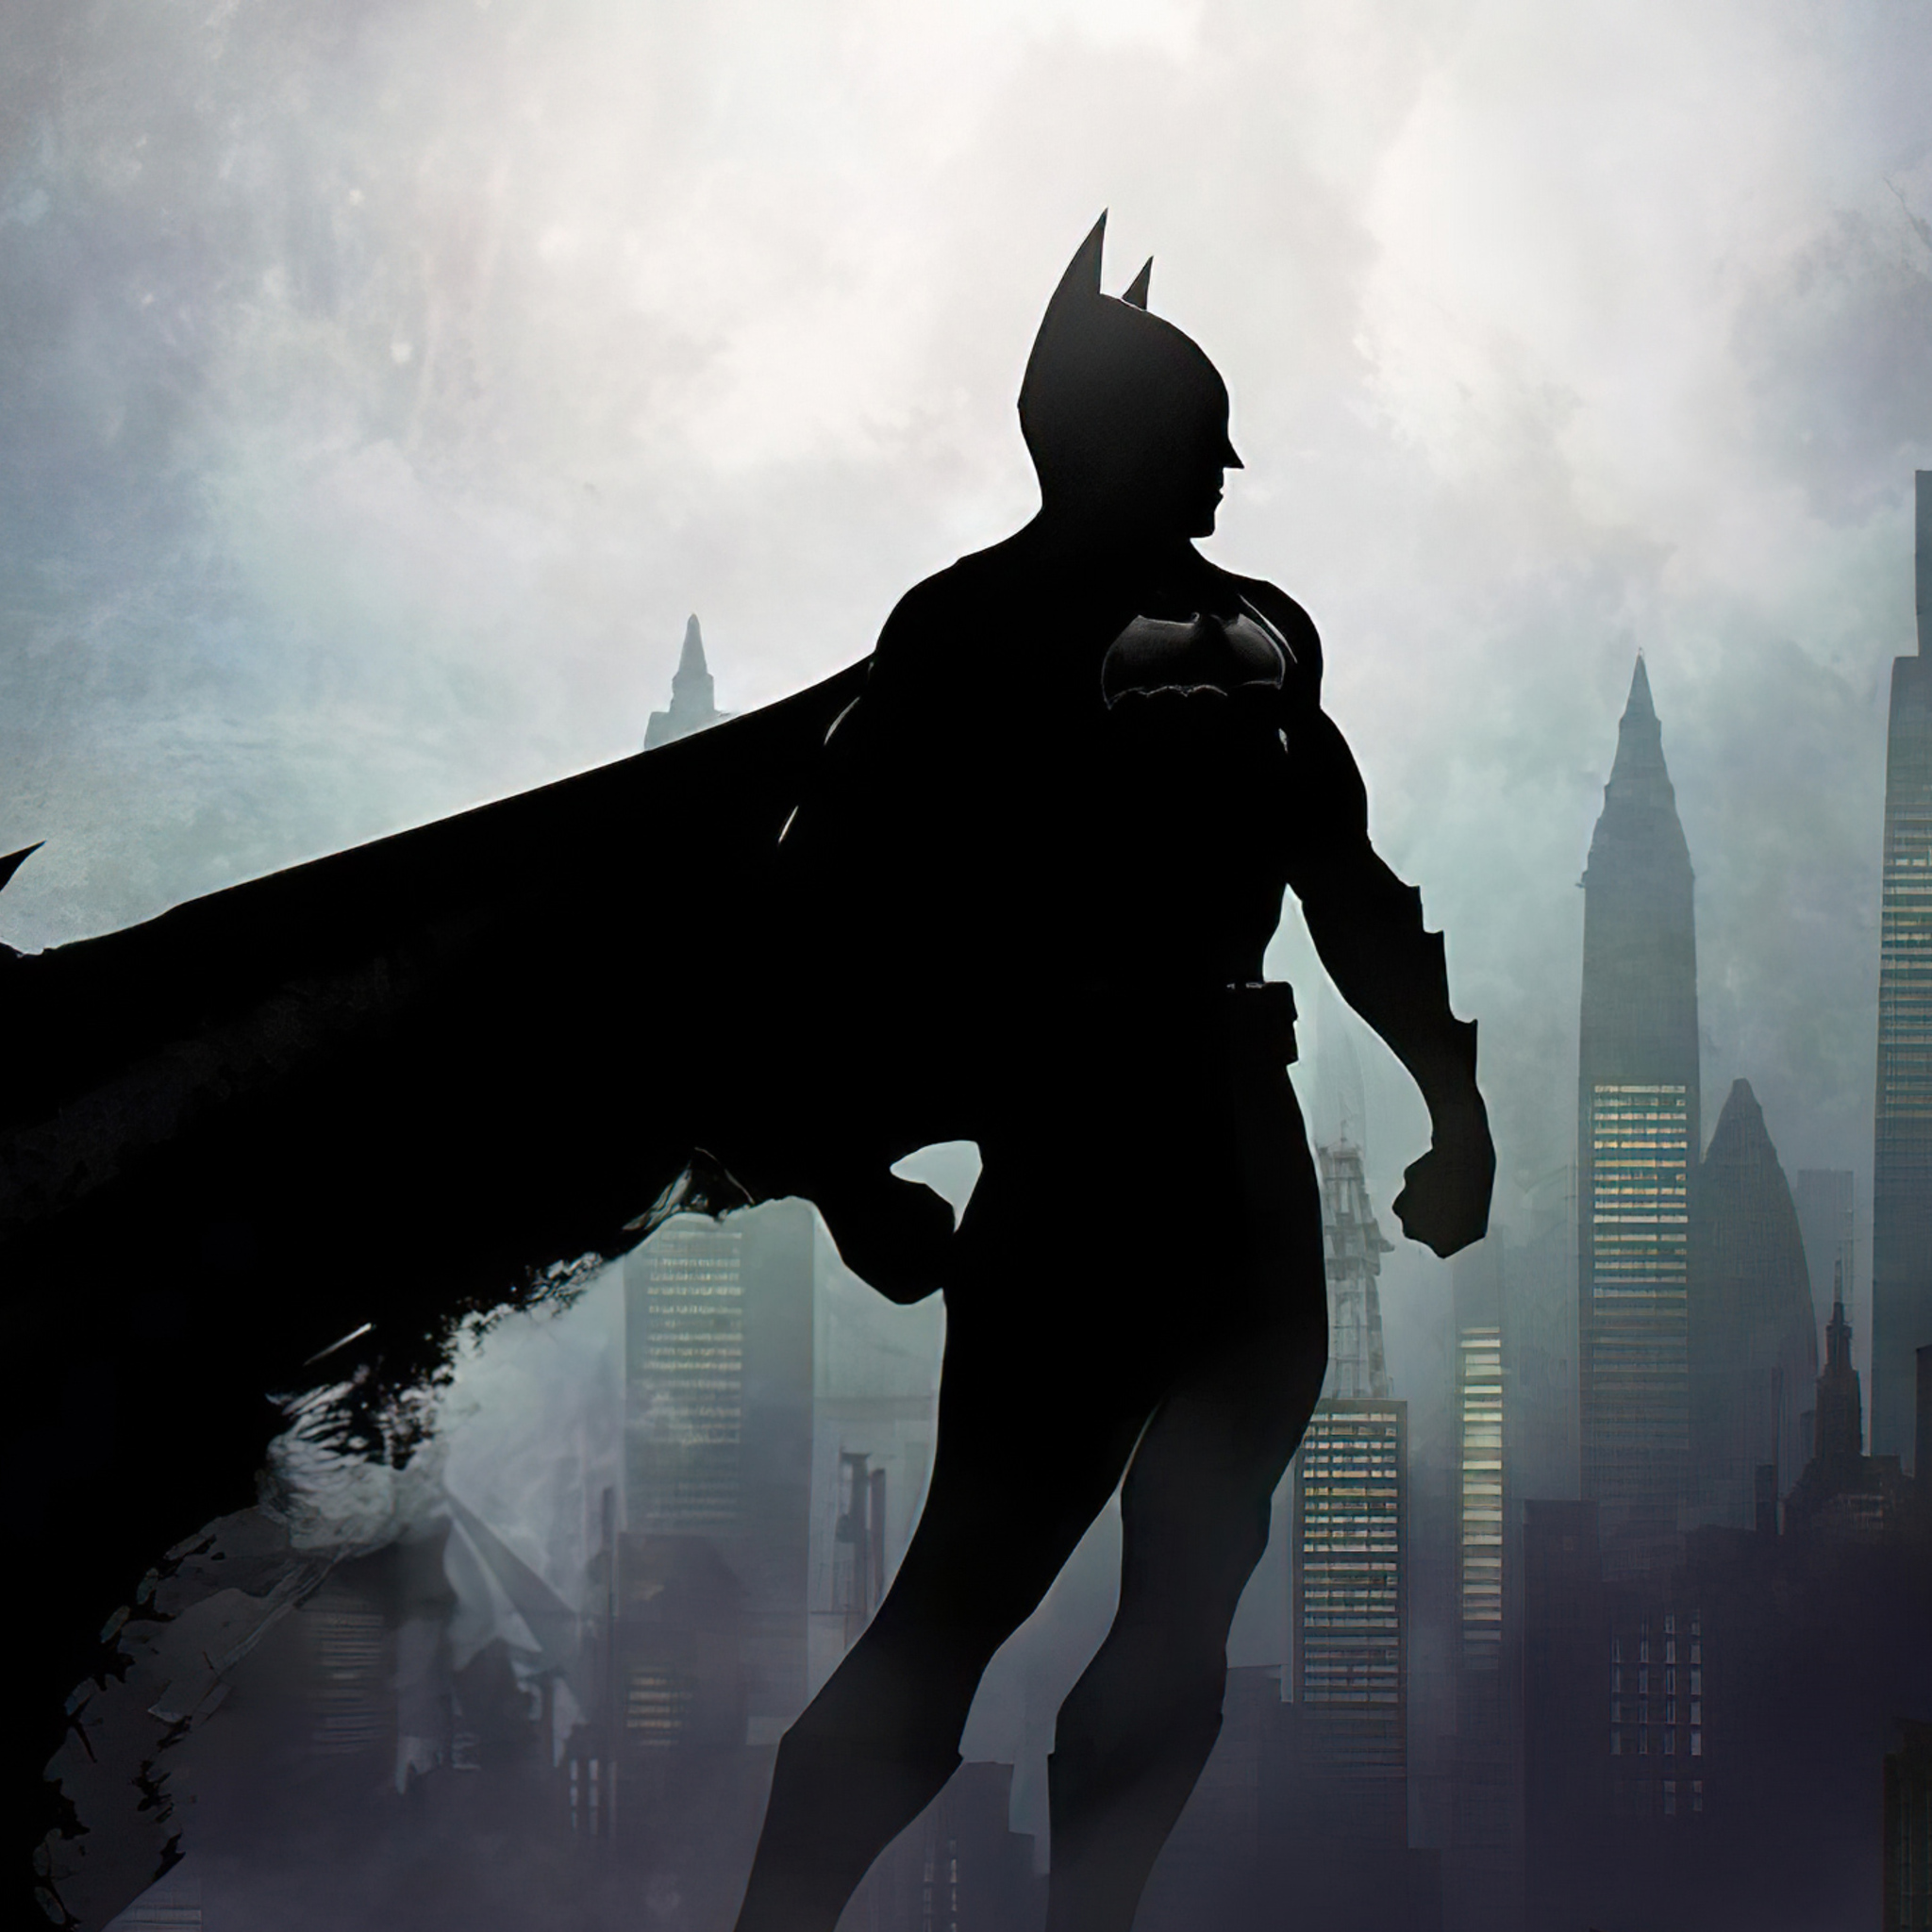 Batman Black Cape Artwork iPad Air HD 4k Wallpaper, Image, Background, Photo and Picture